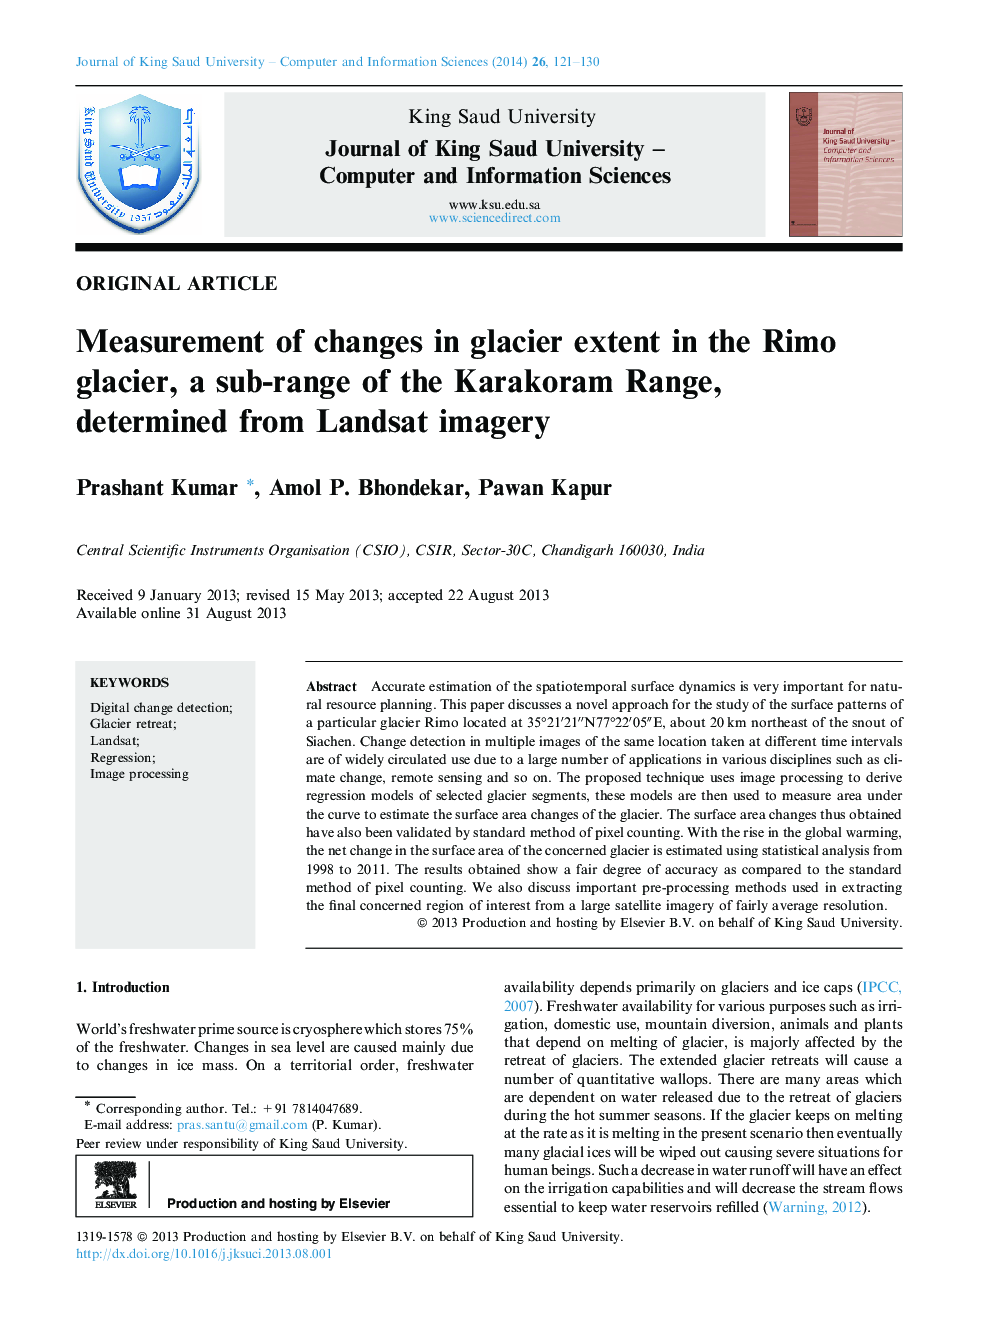 Measurement of changes in glacier extent in the Rimo glacier, a sub-range of the Karakoram Range, determined from Landsat imagery 